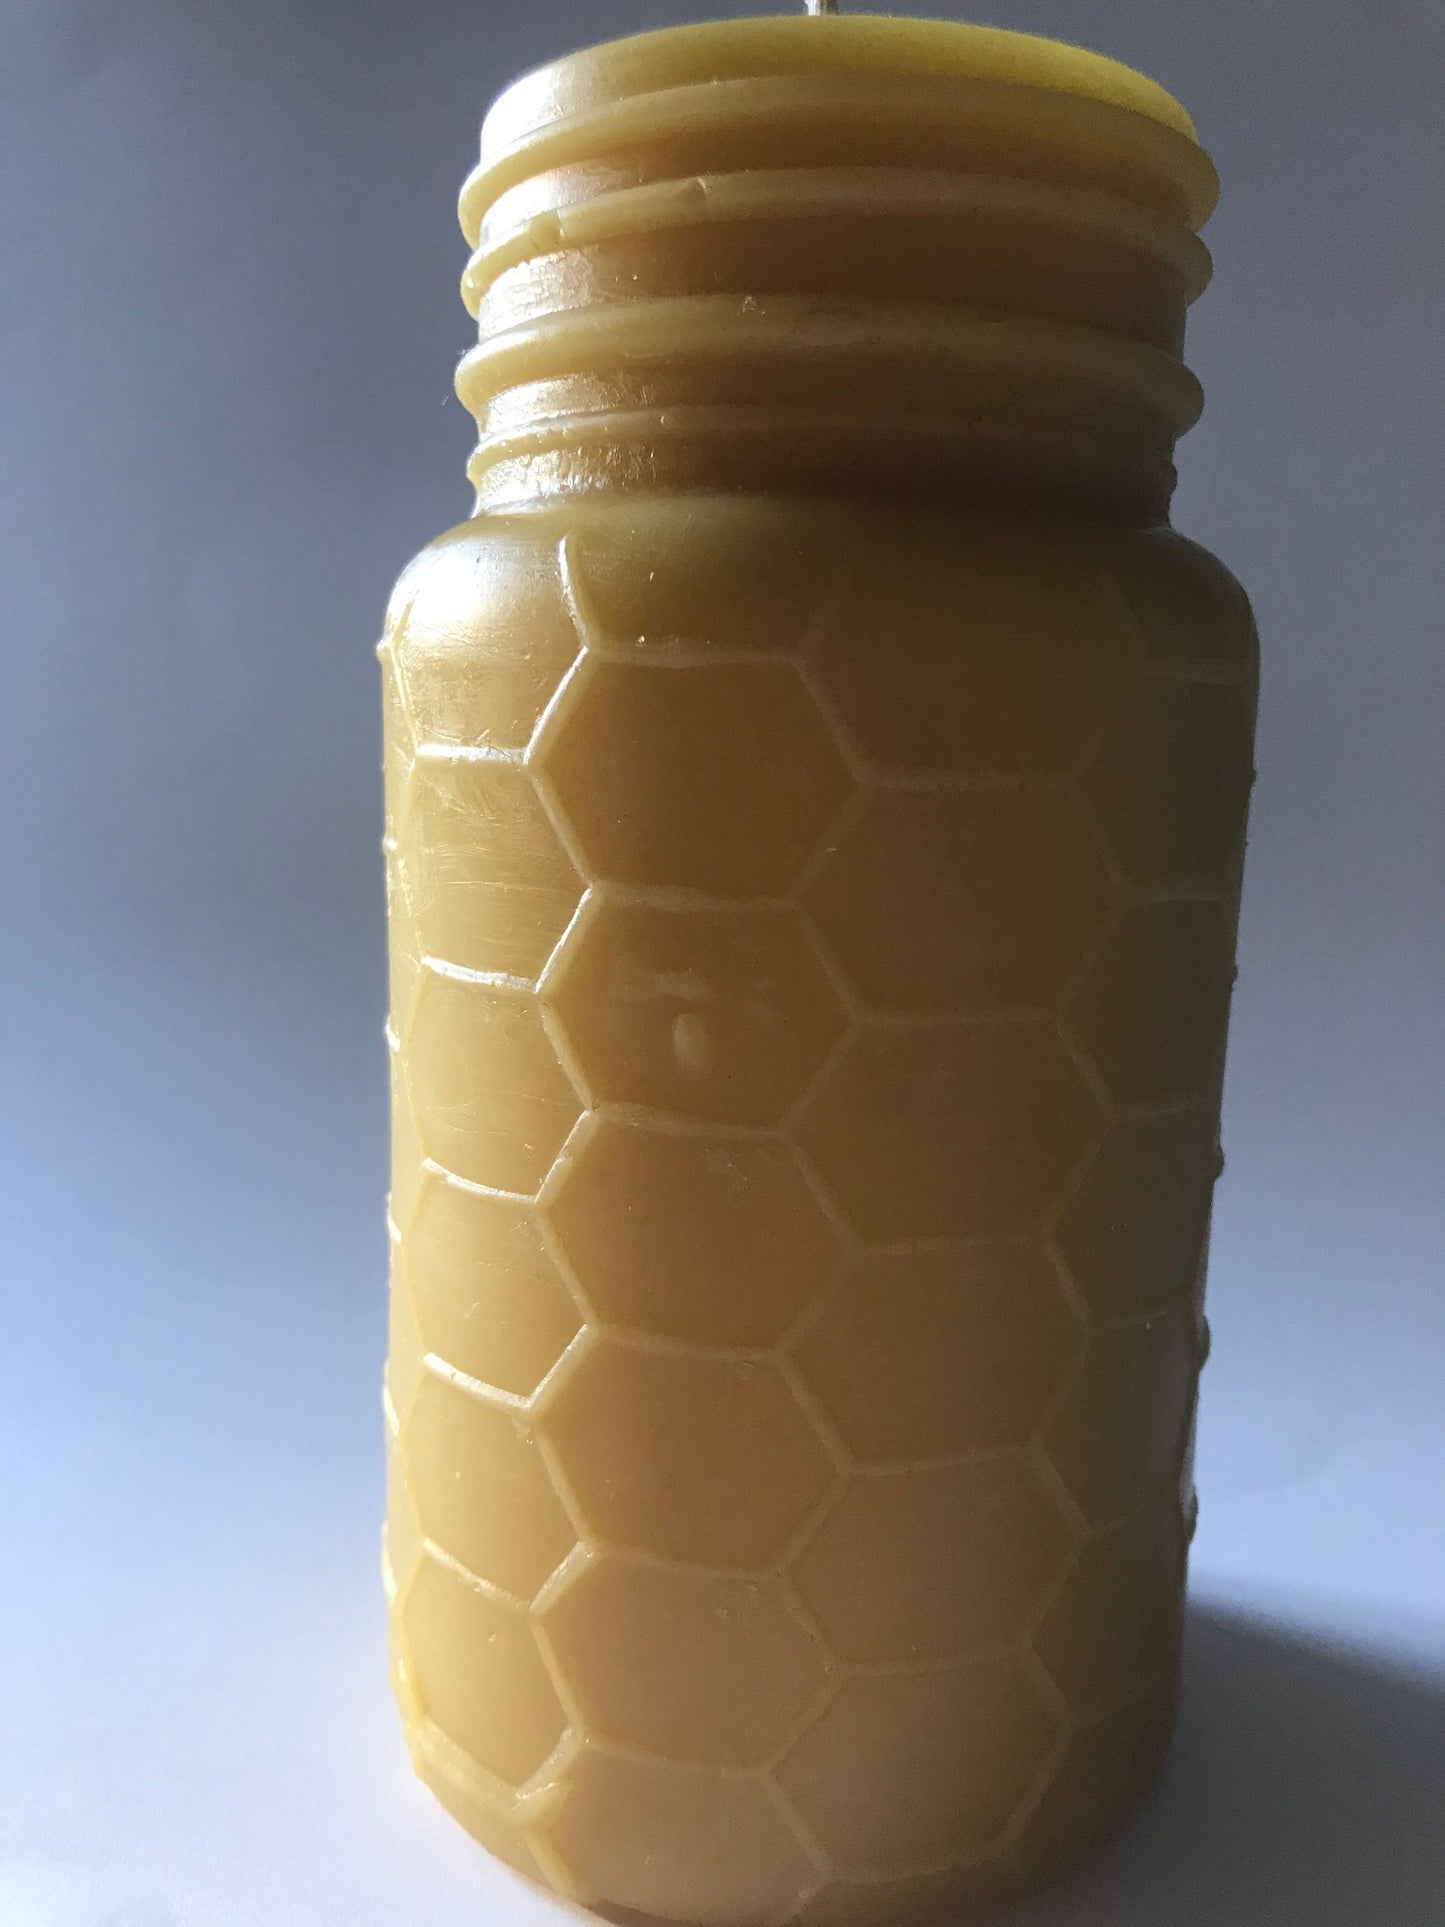 Transylvanian Soviet-Era Honey Bottle Candle in Pure Beeswax - Candle, Beeswax Candle, Bottle Candle - One of a Kind